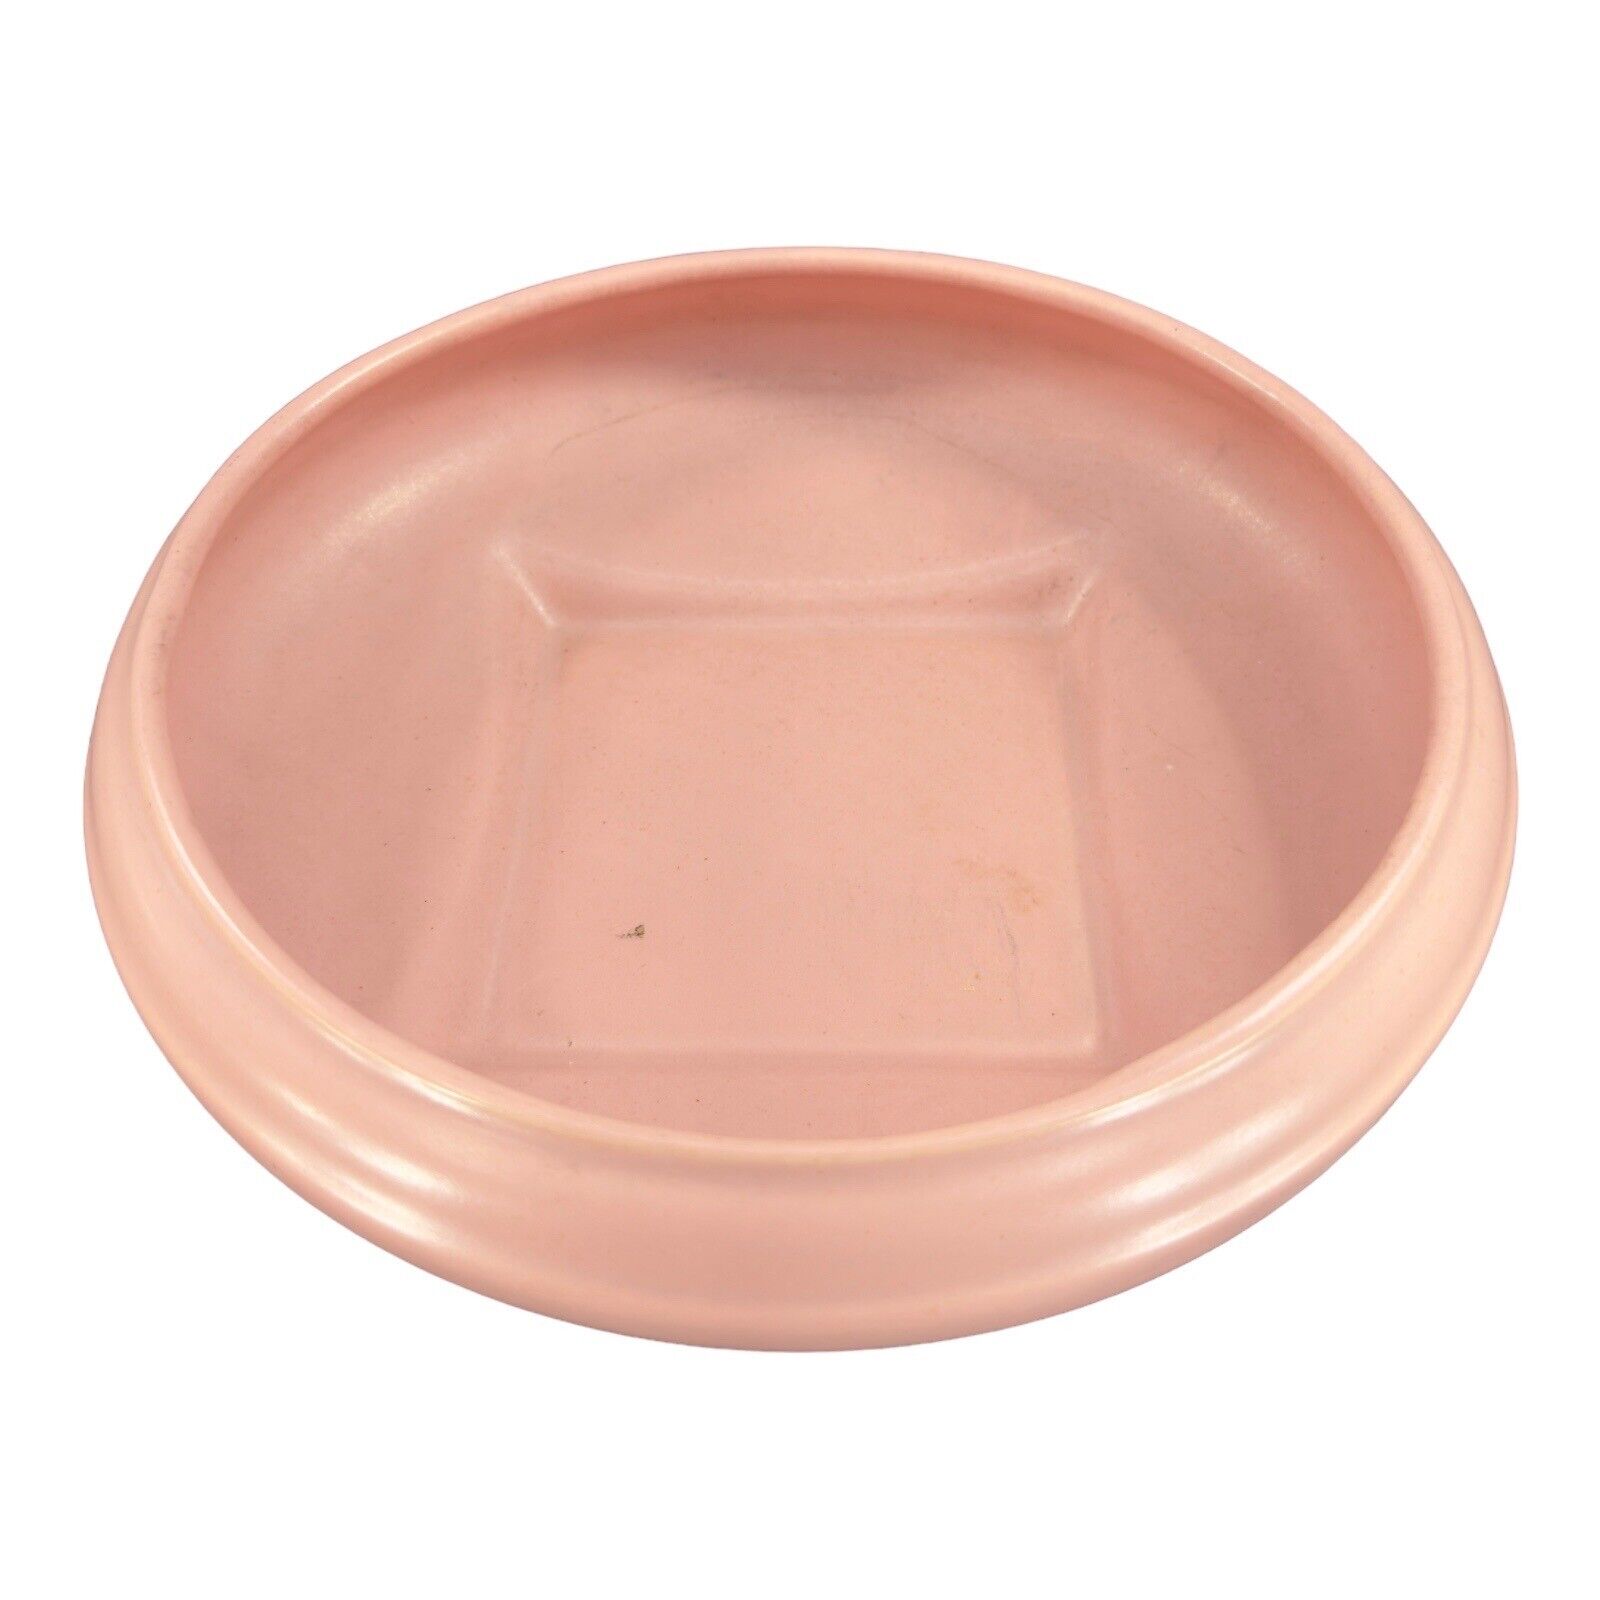 Abingdon USA Pottery Light Pink Salmon Planter Dish Bowl Marked Ceramic Round